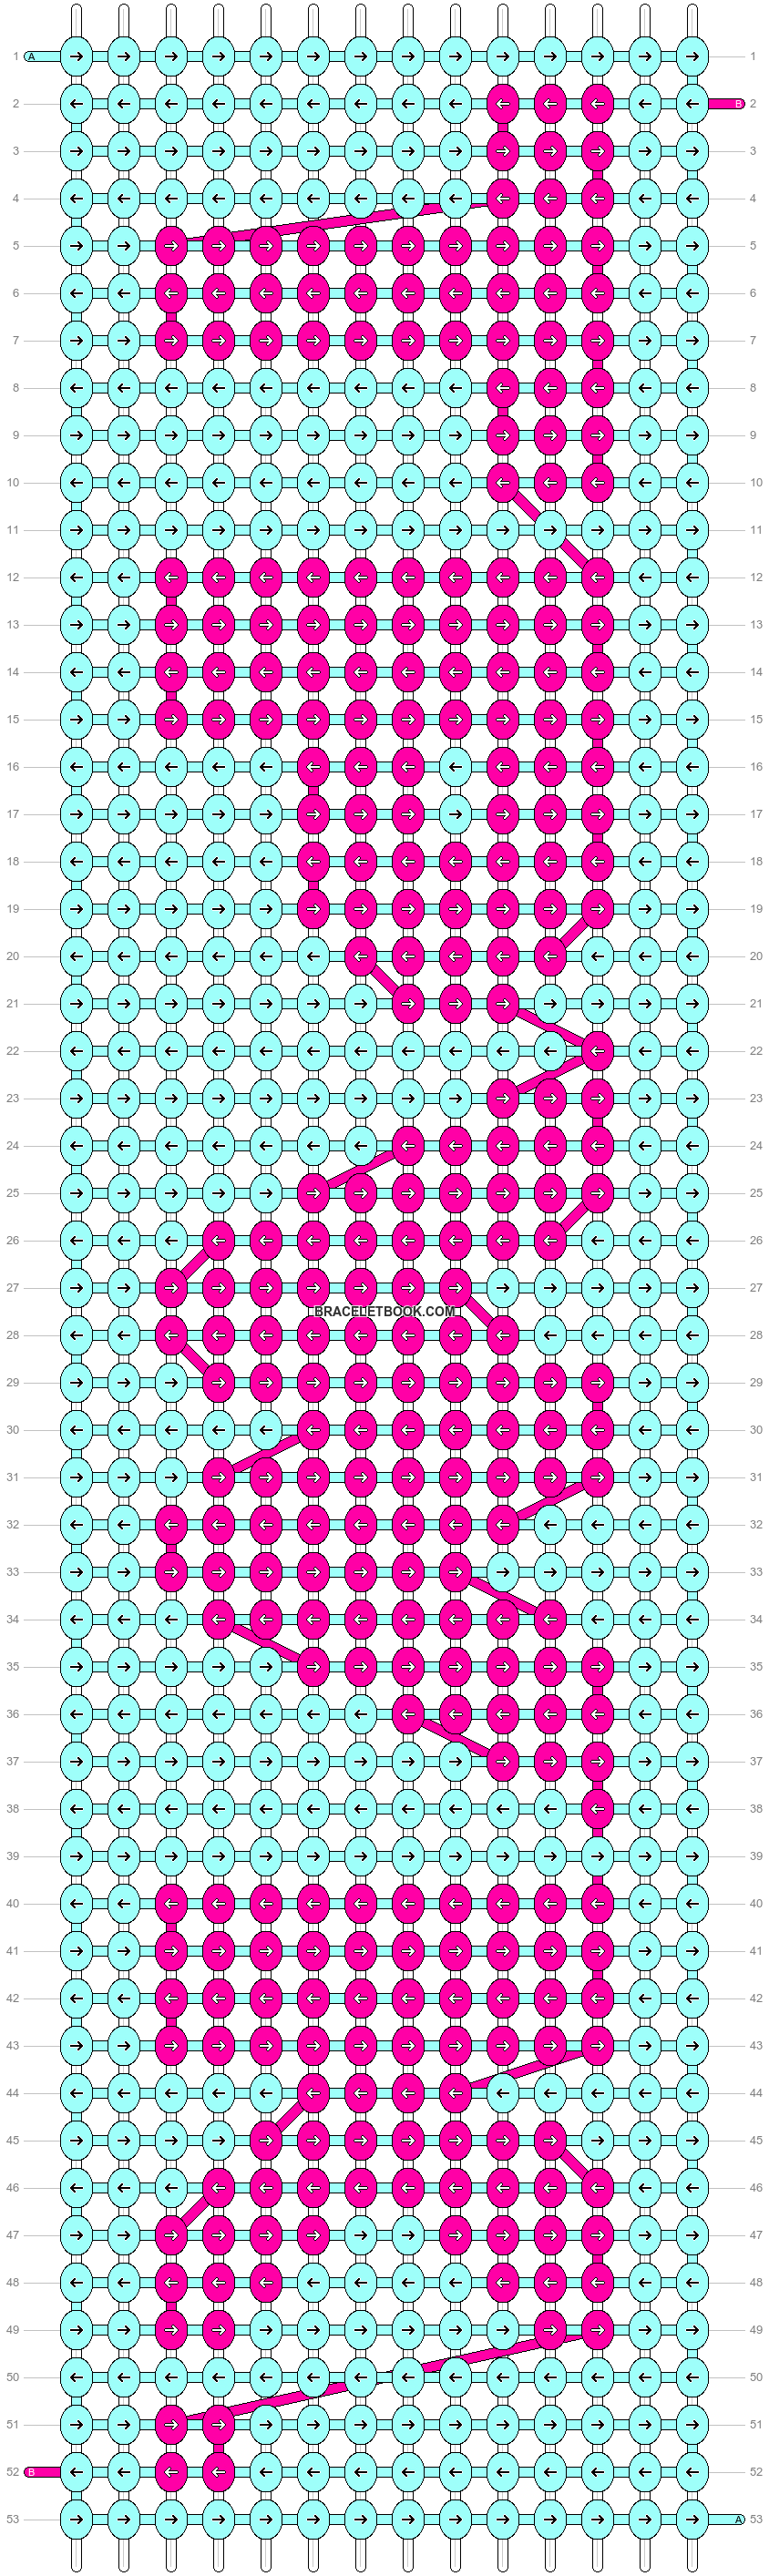 Alpha pattern #38816 variation #109800 pattern